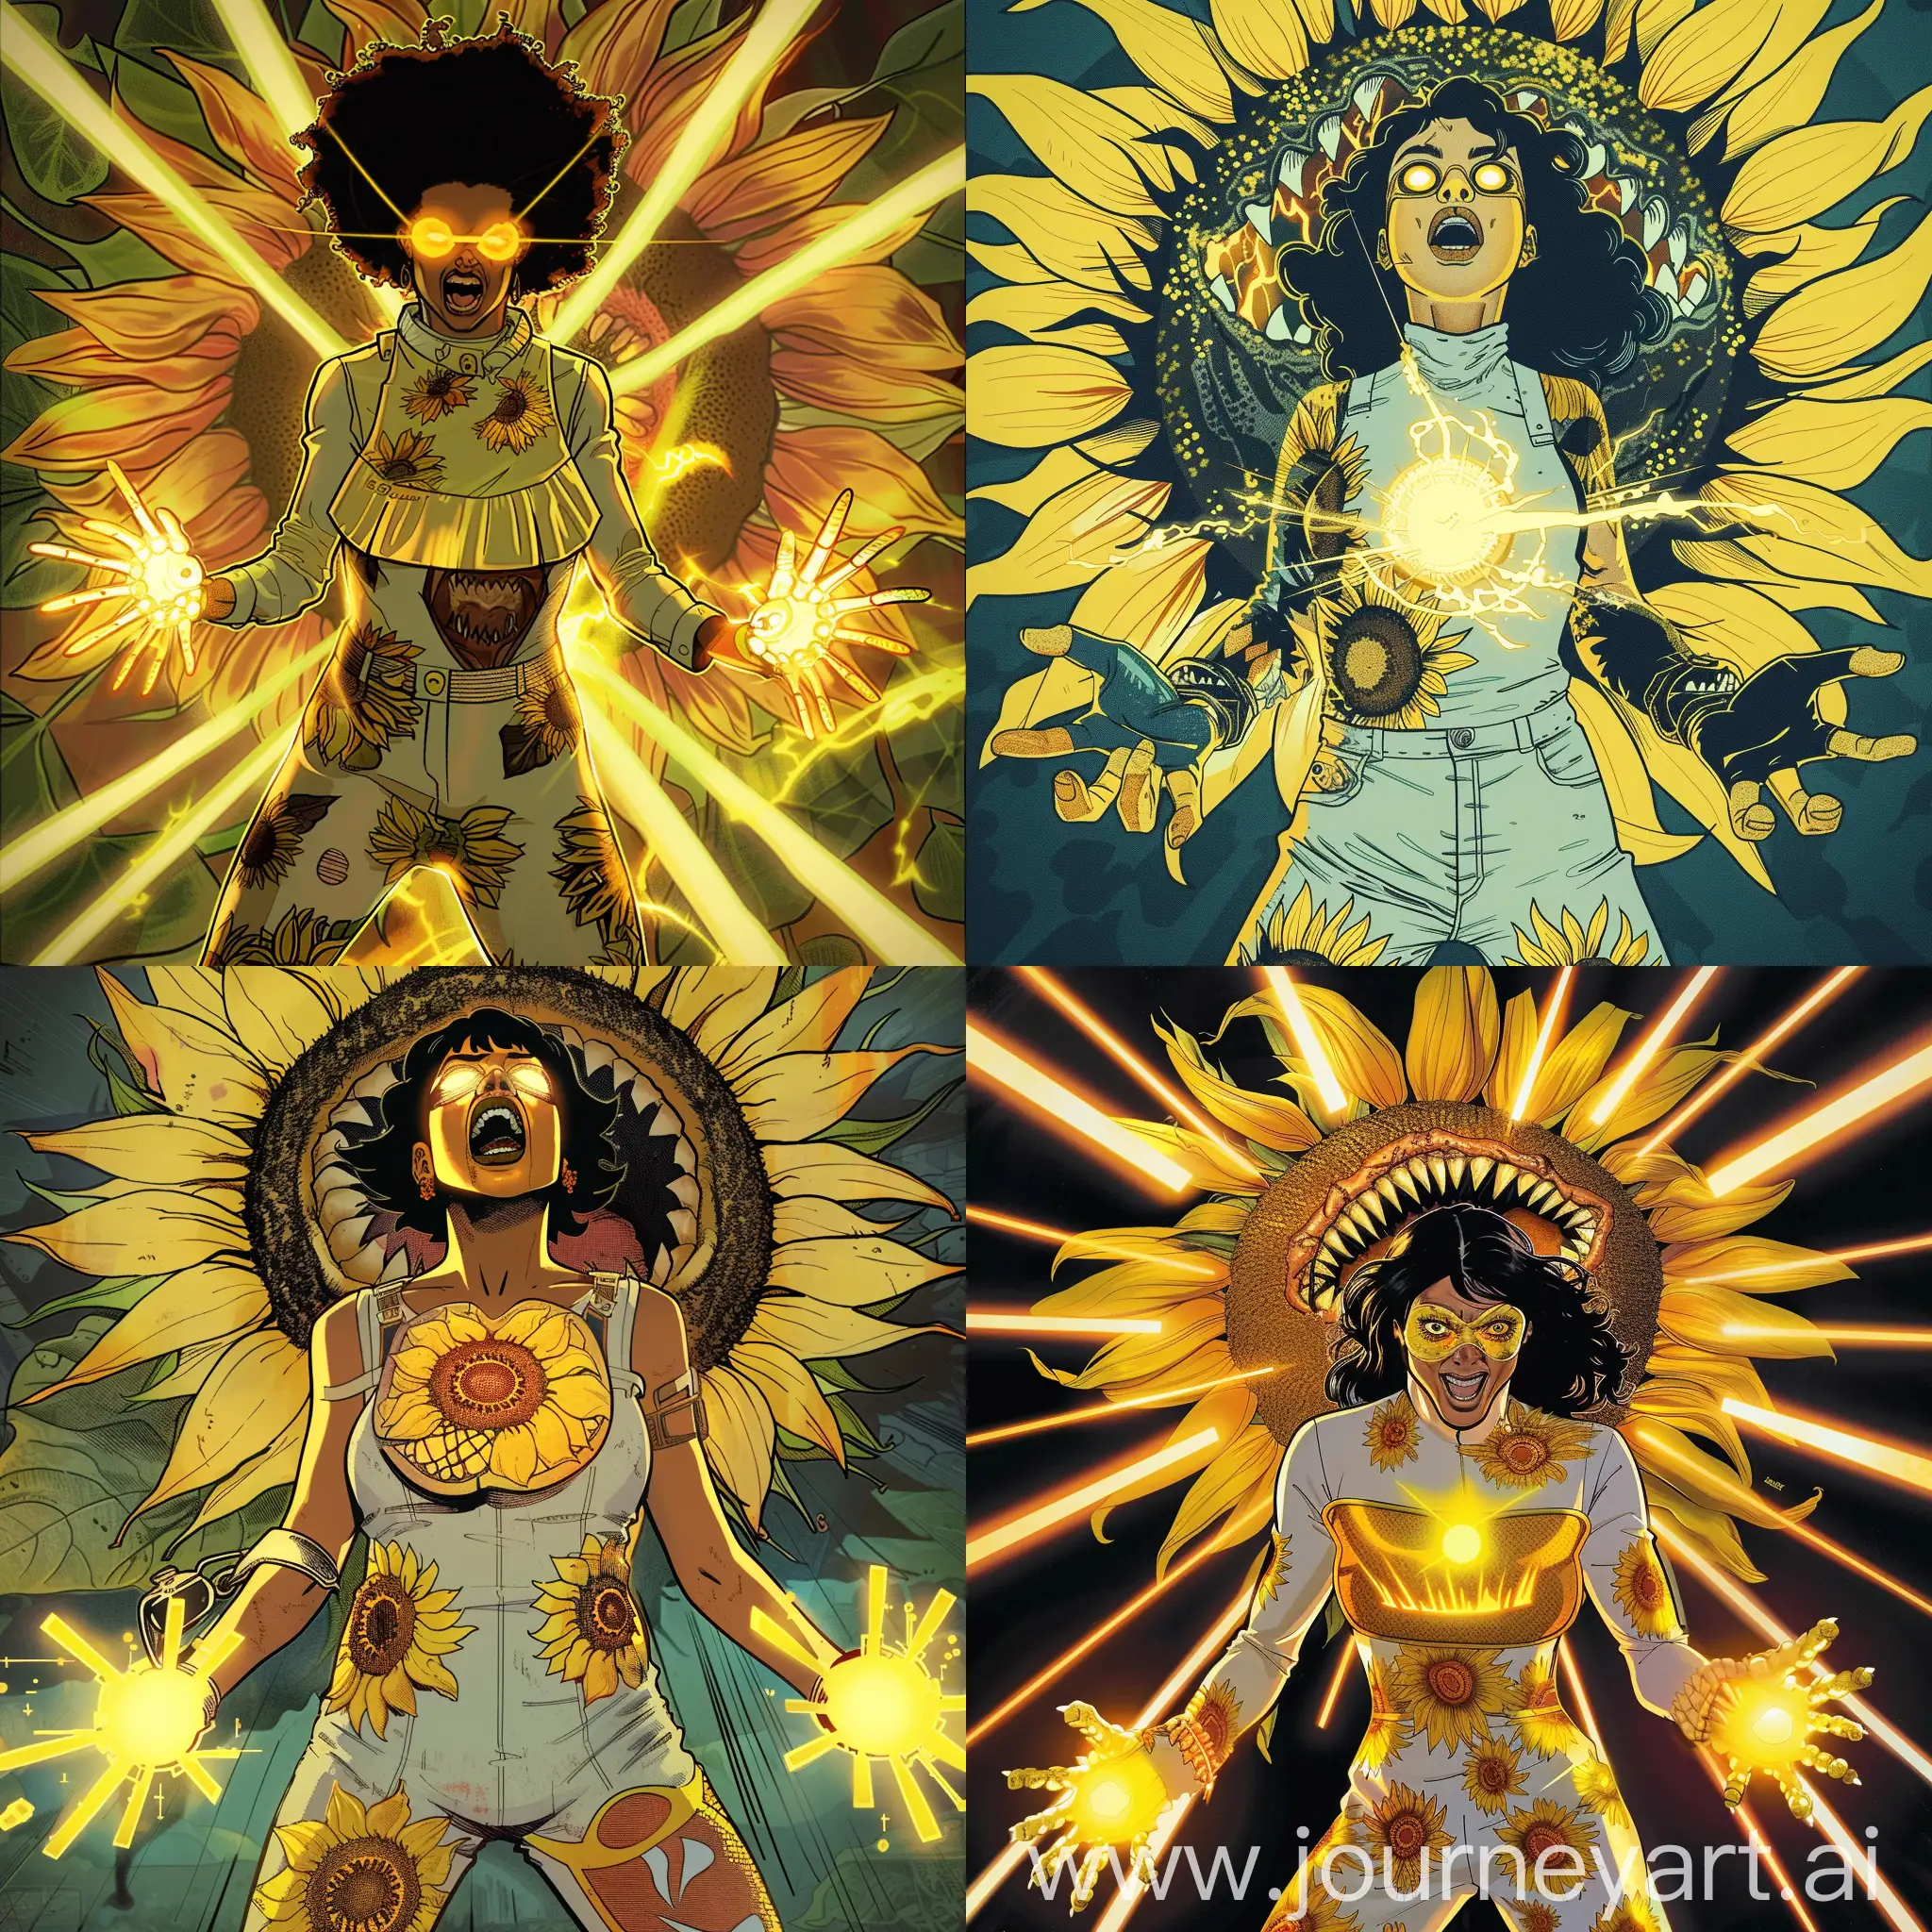 Sunflower-Bib-Woman-Controls-Giant-Sunflower-in-Marvel-Comic-Style